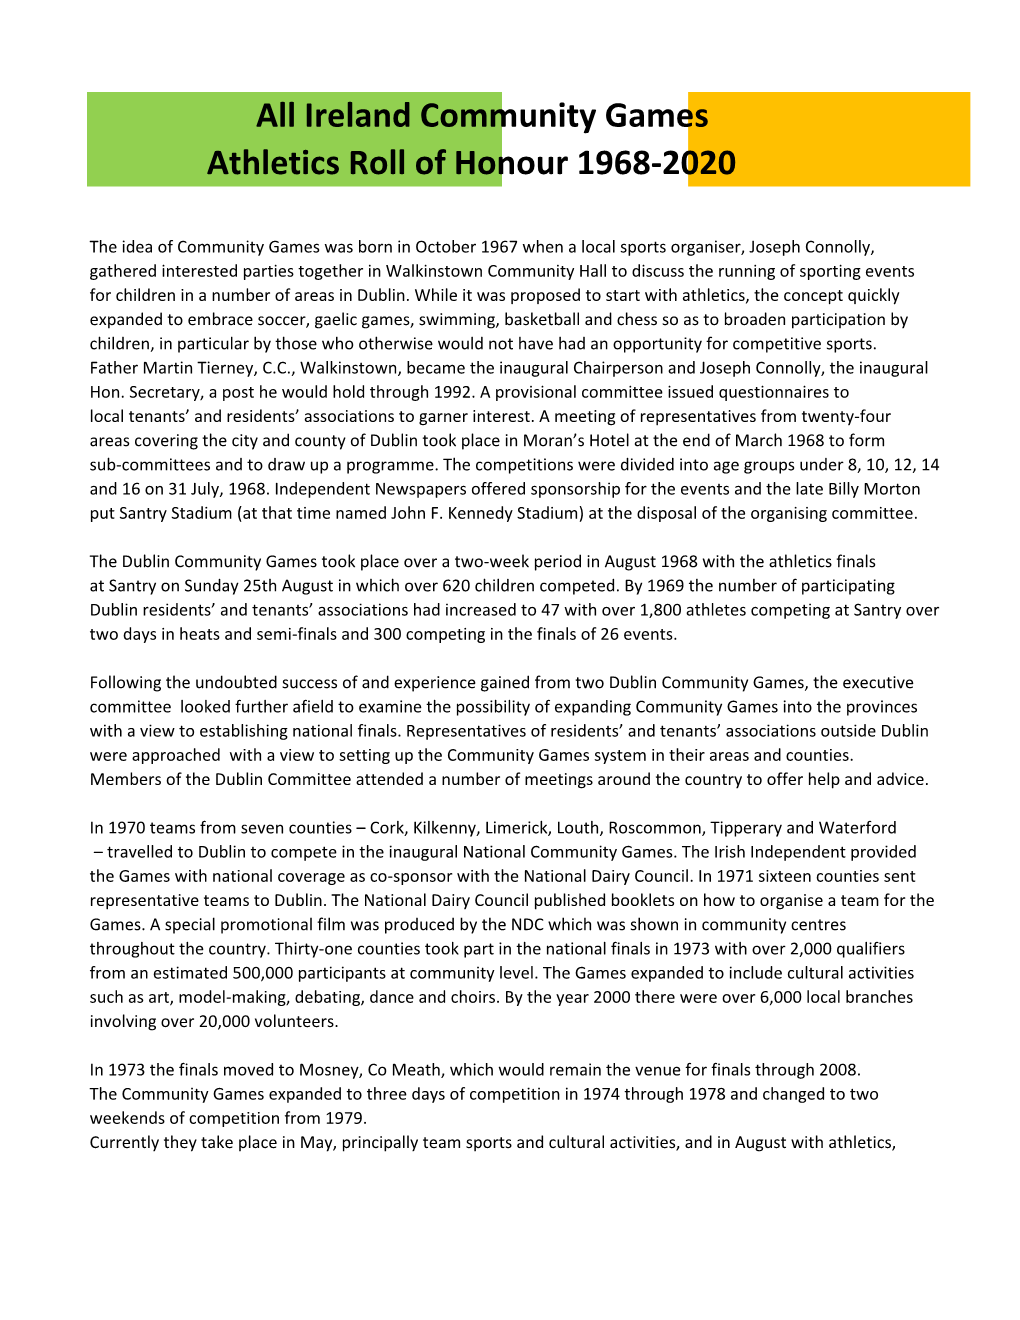 All Ireland Community Games Athletics Roll of Honour 1968-2020